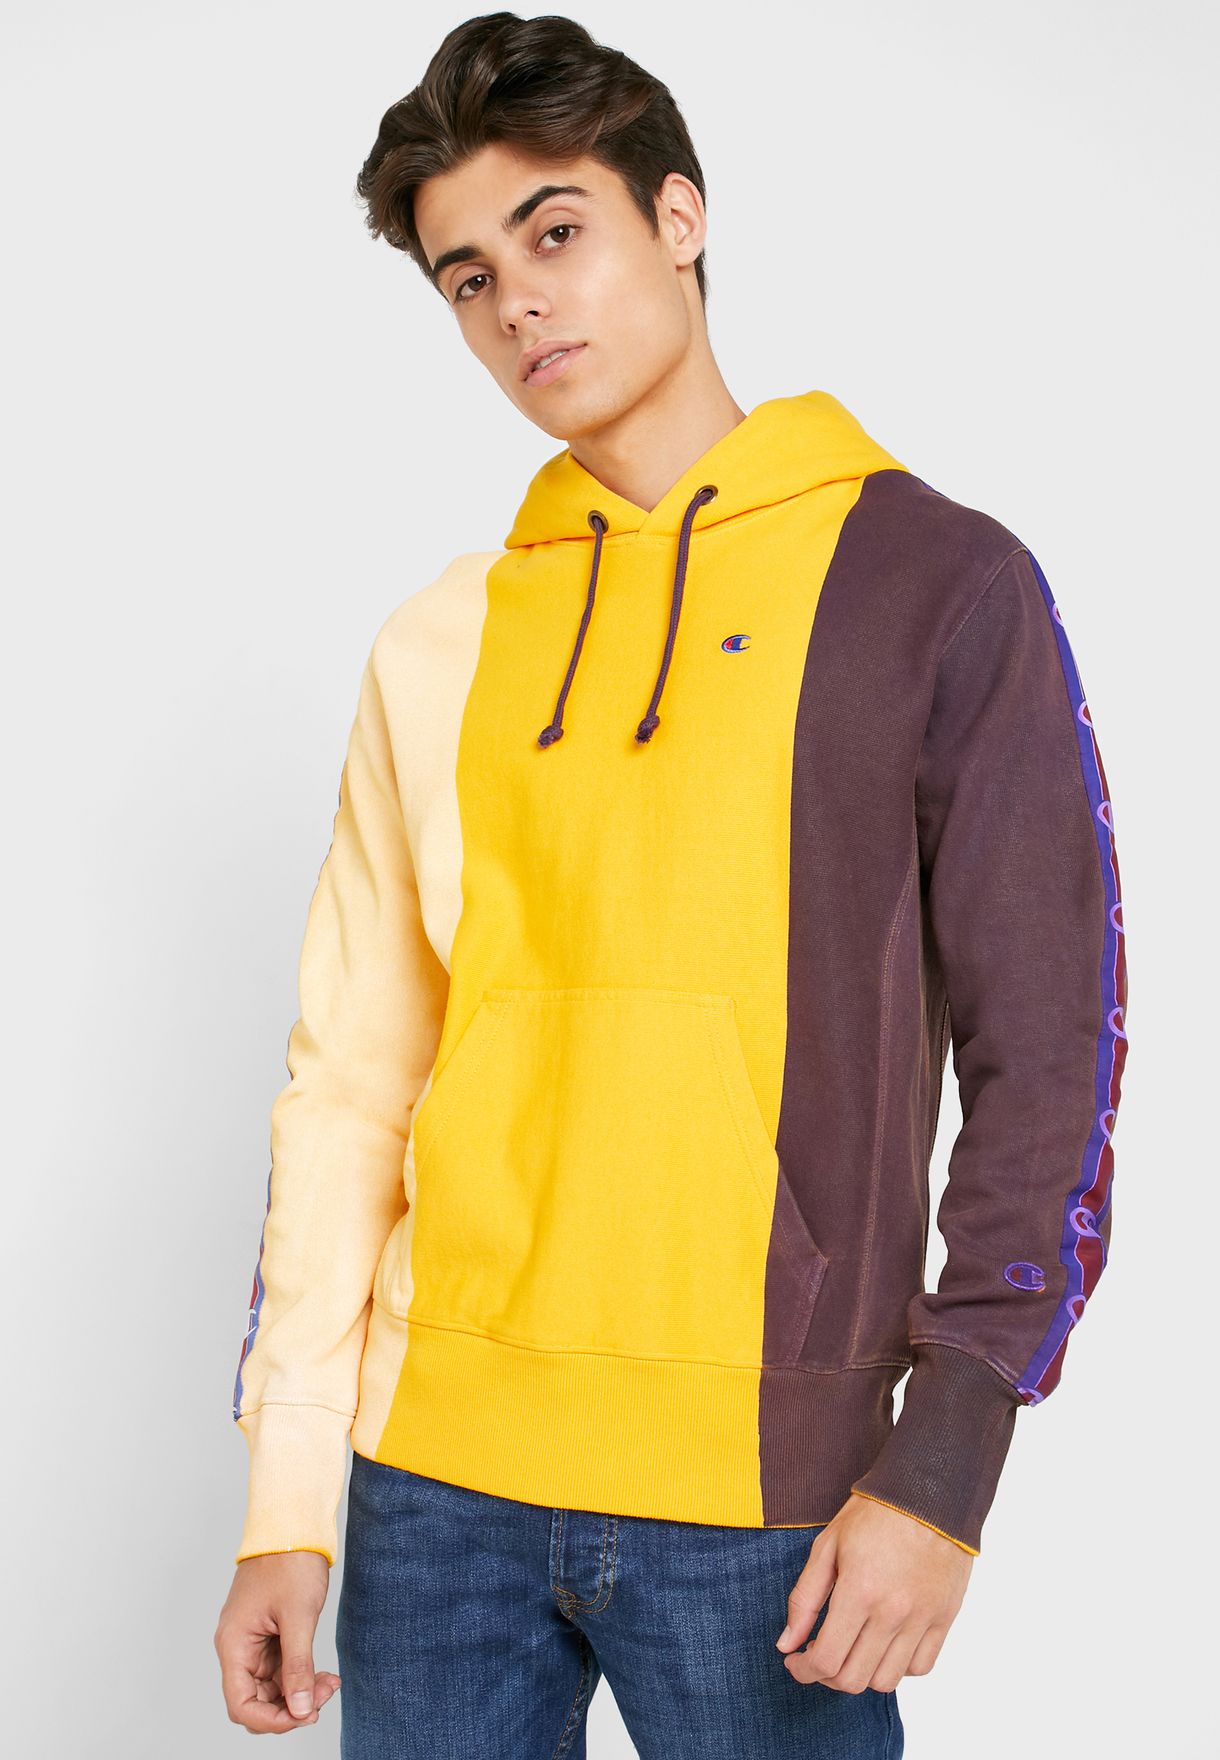 champion multicolor hoodie